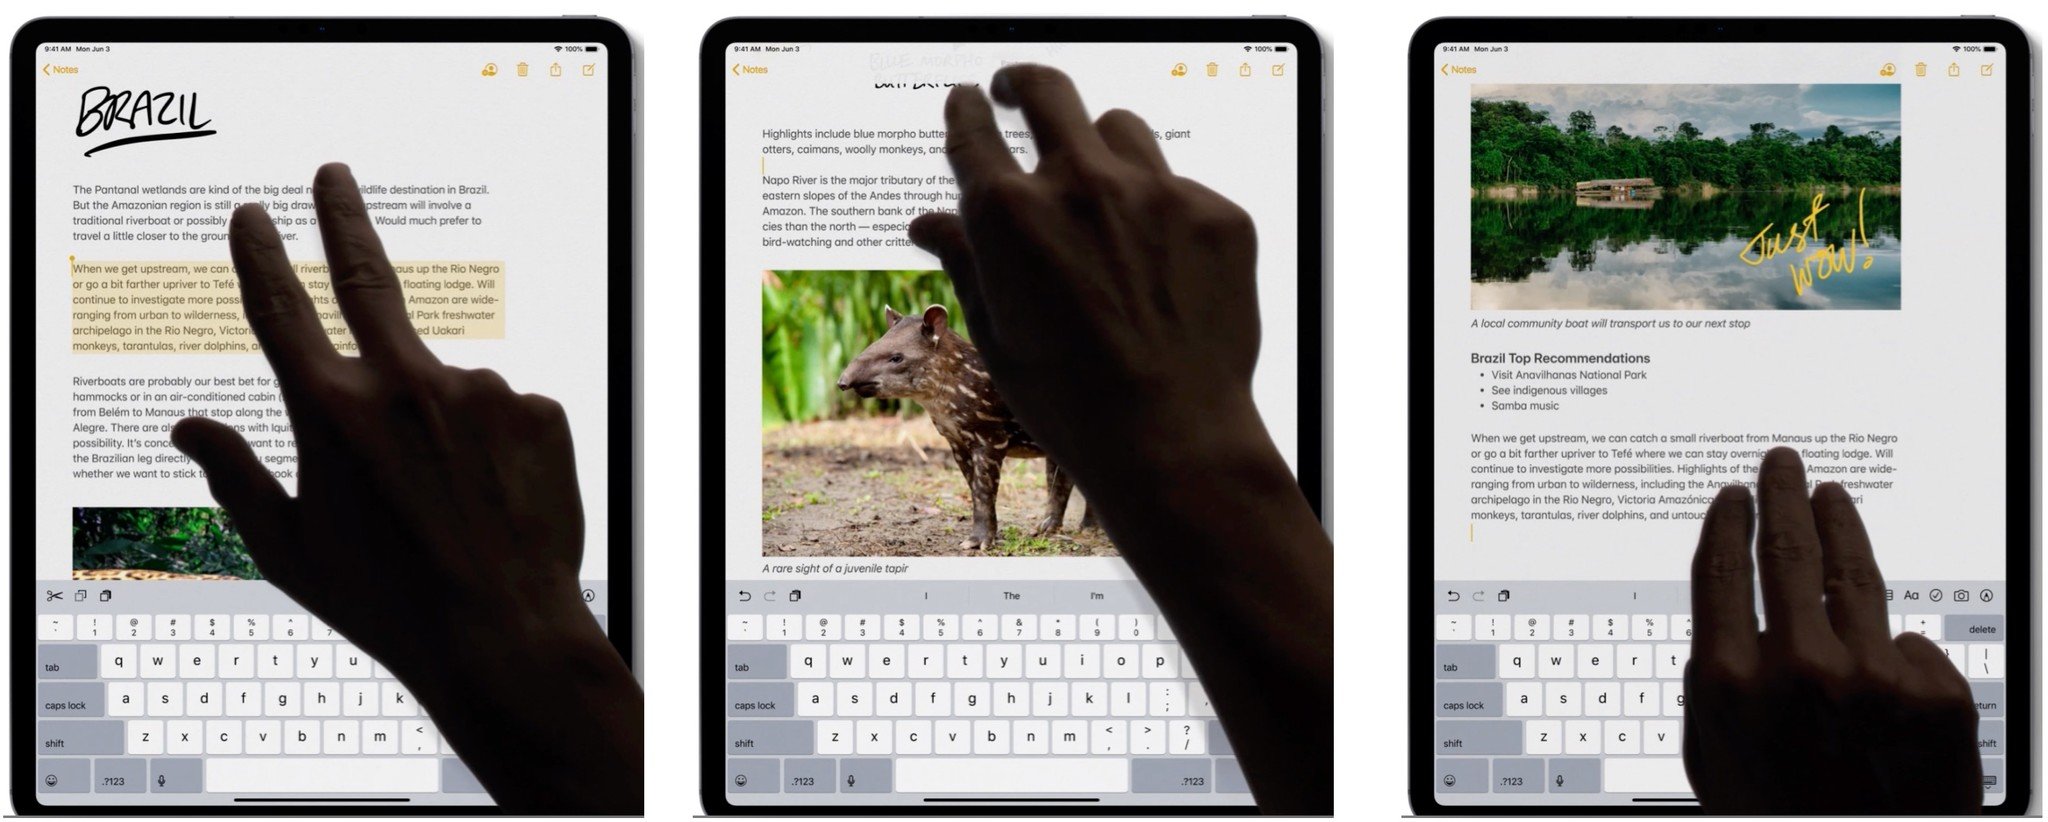 iPadOS 13 text gestures